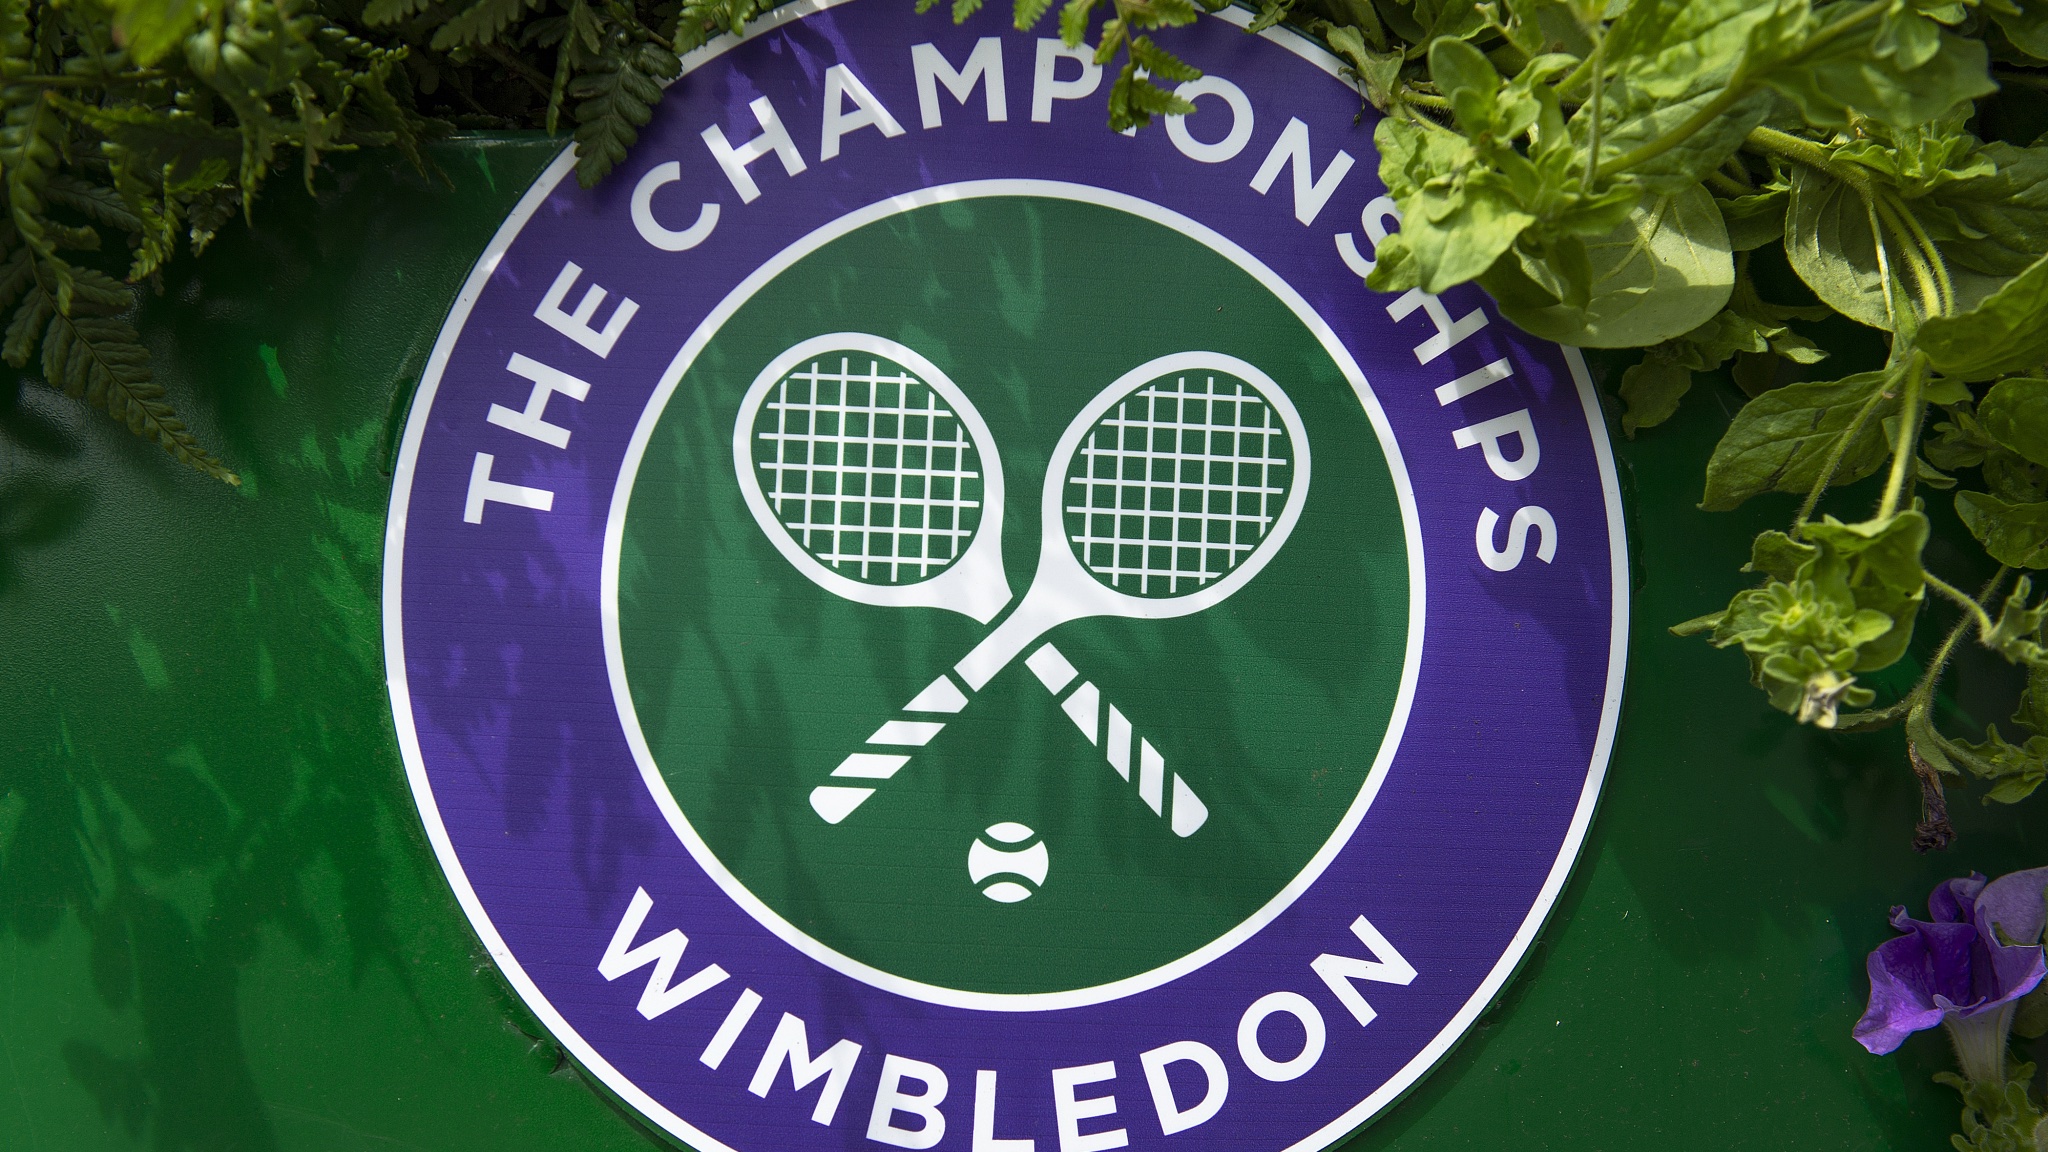 TennisStreams!) Wimbledon tennis 2022 Live Streaming Free on Reddit, Twitch and Crackstreams